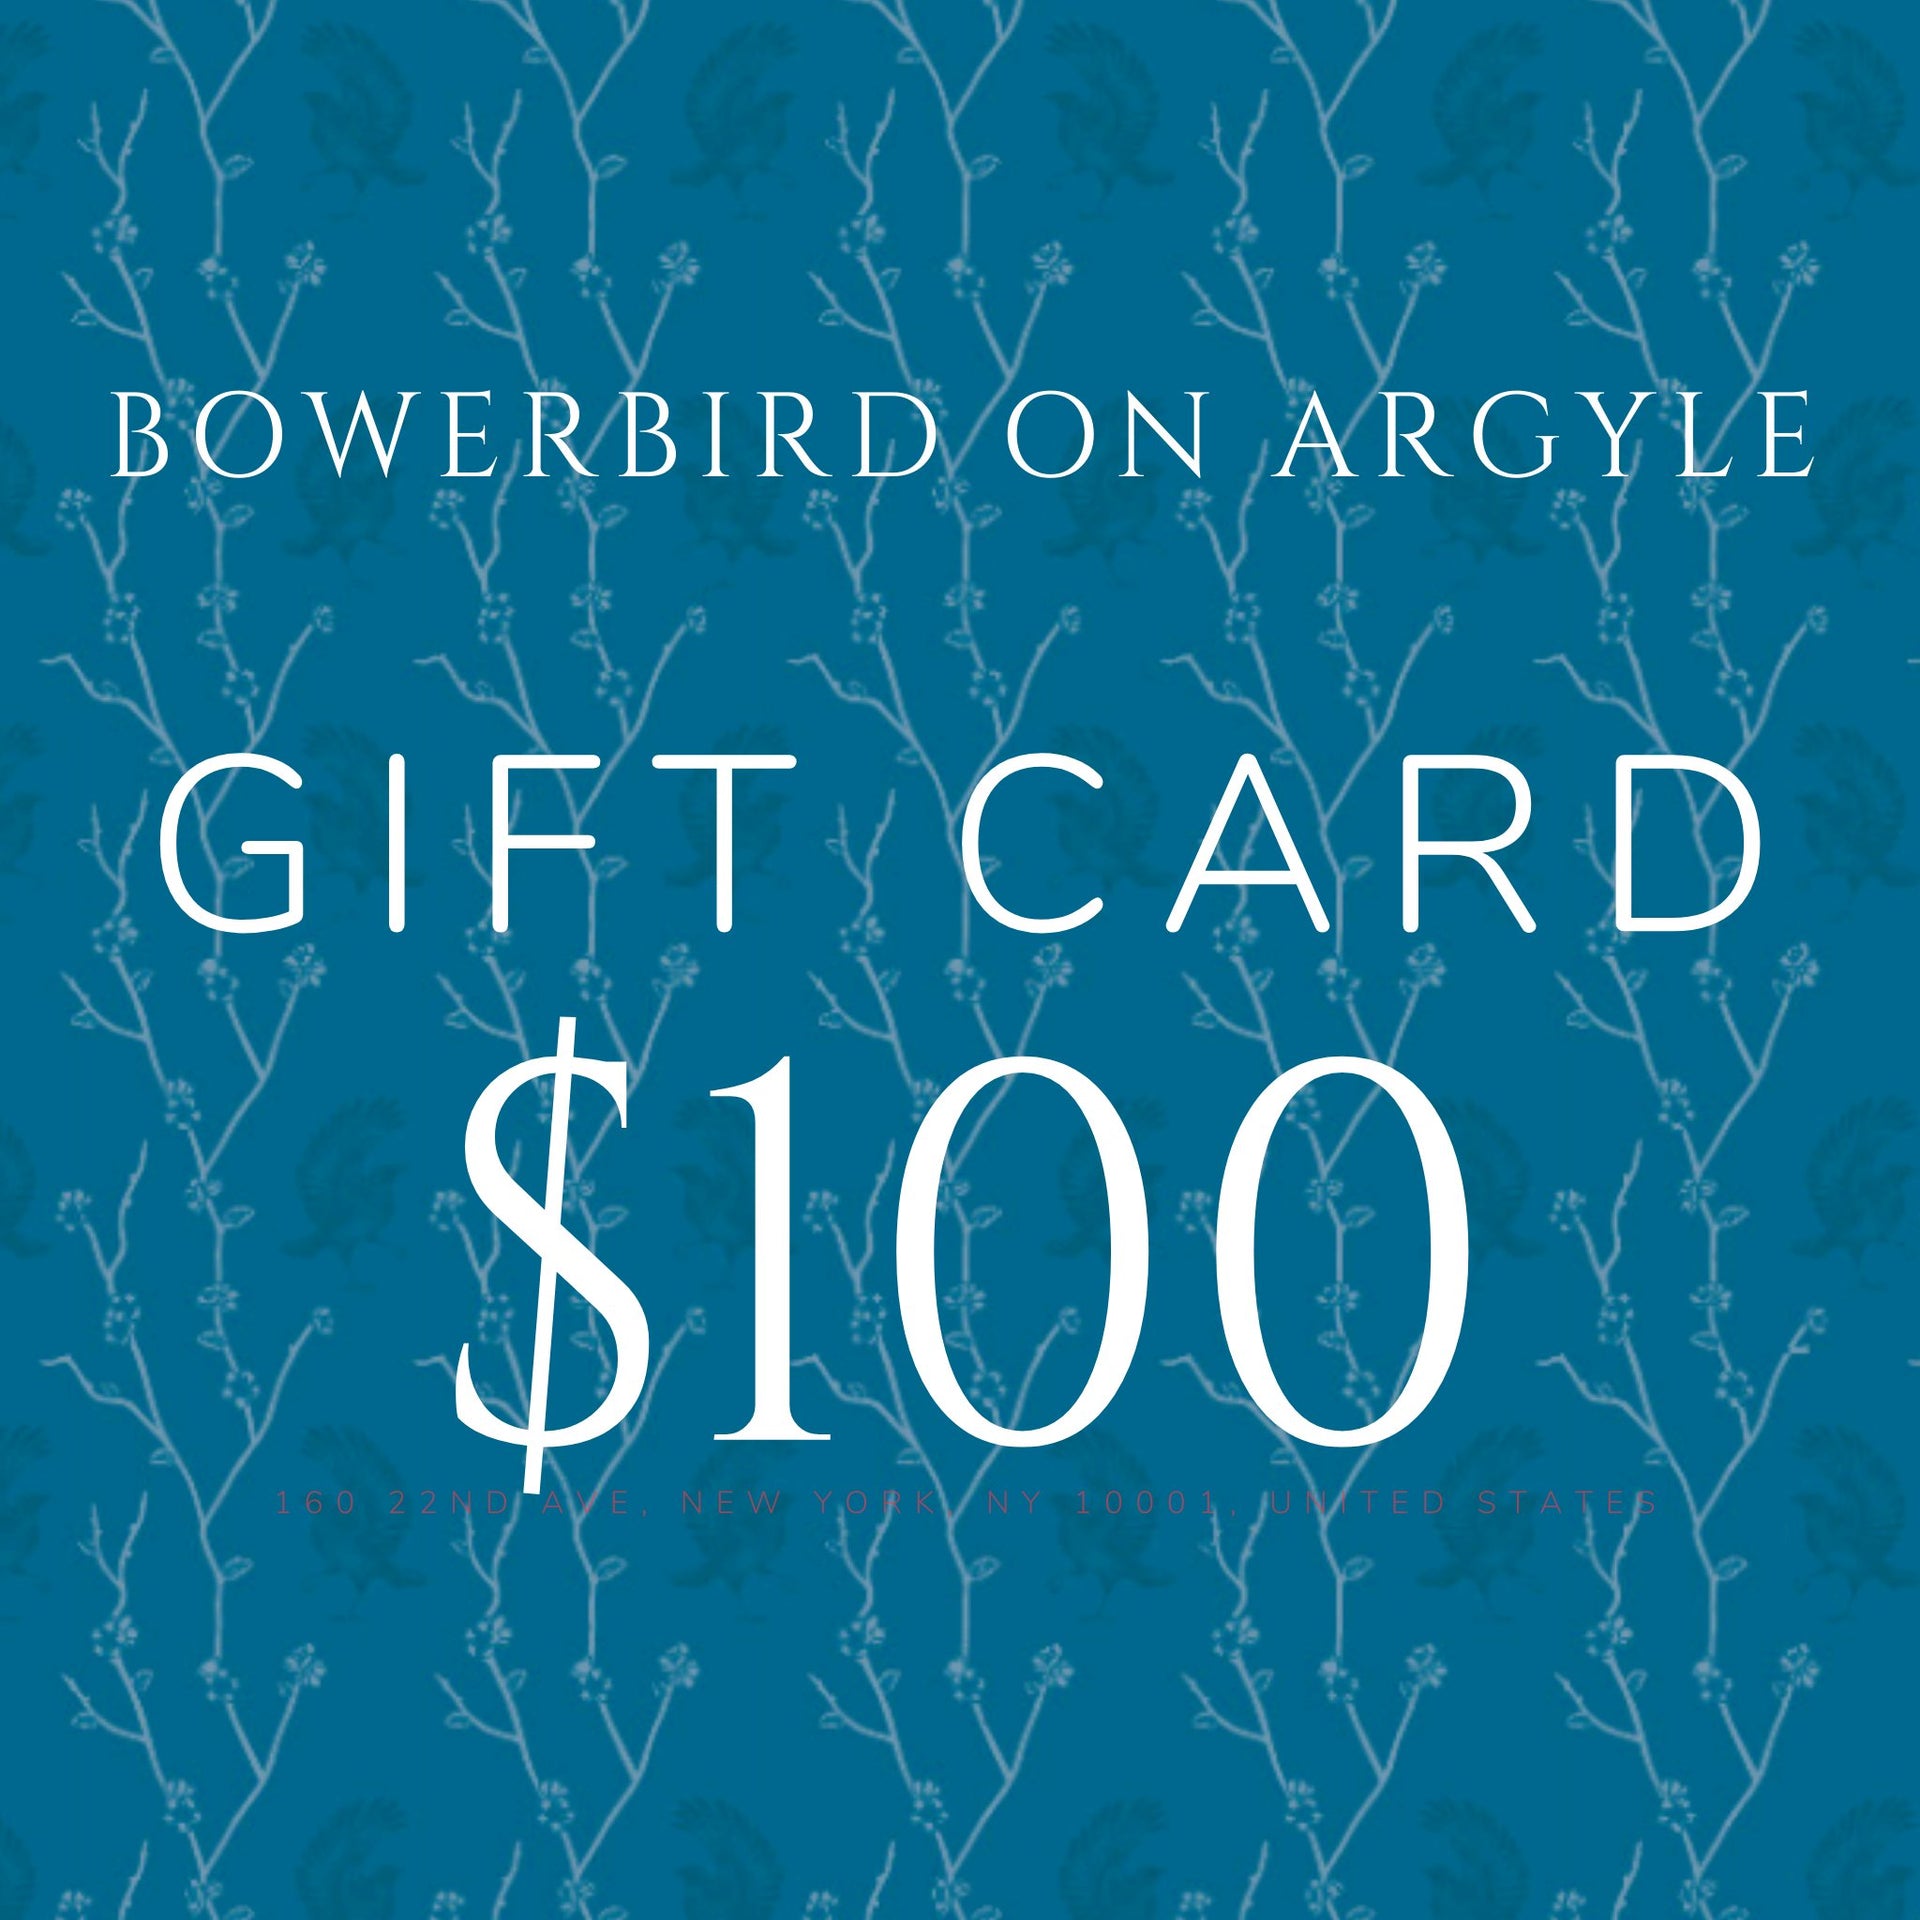 Gift Cards - Bowerbird on Argyle